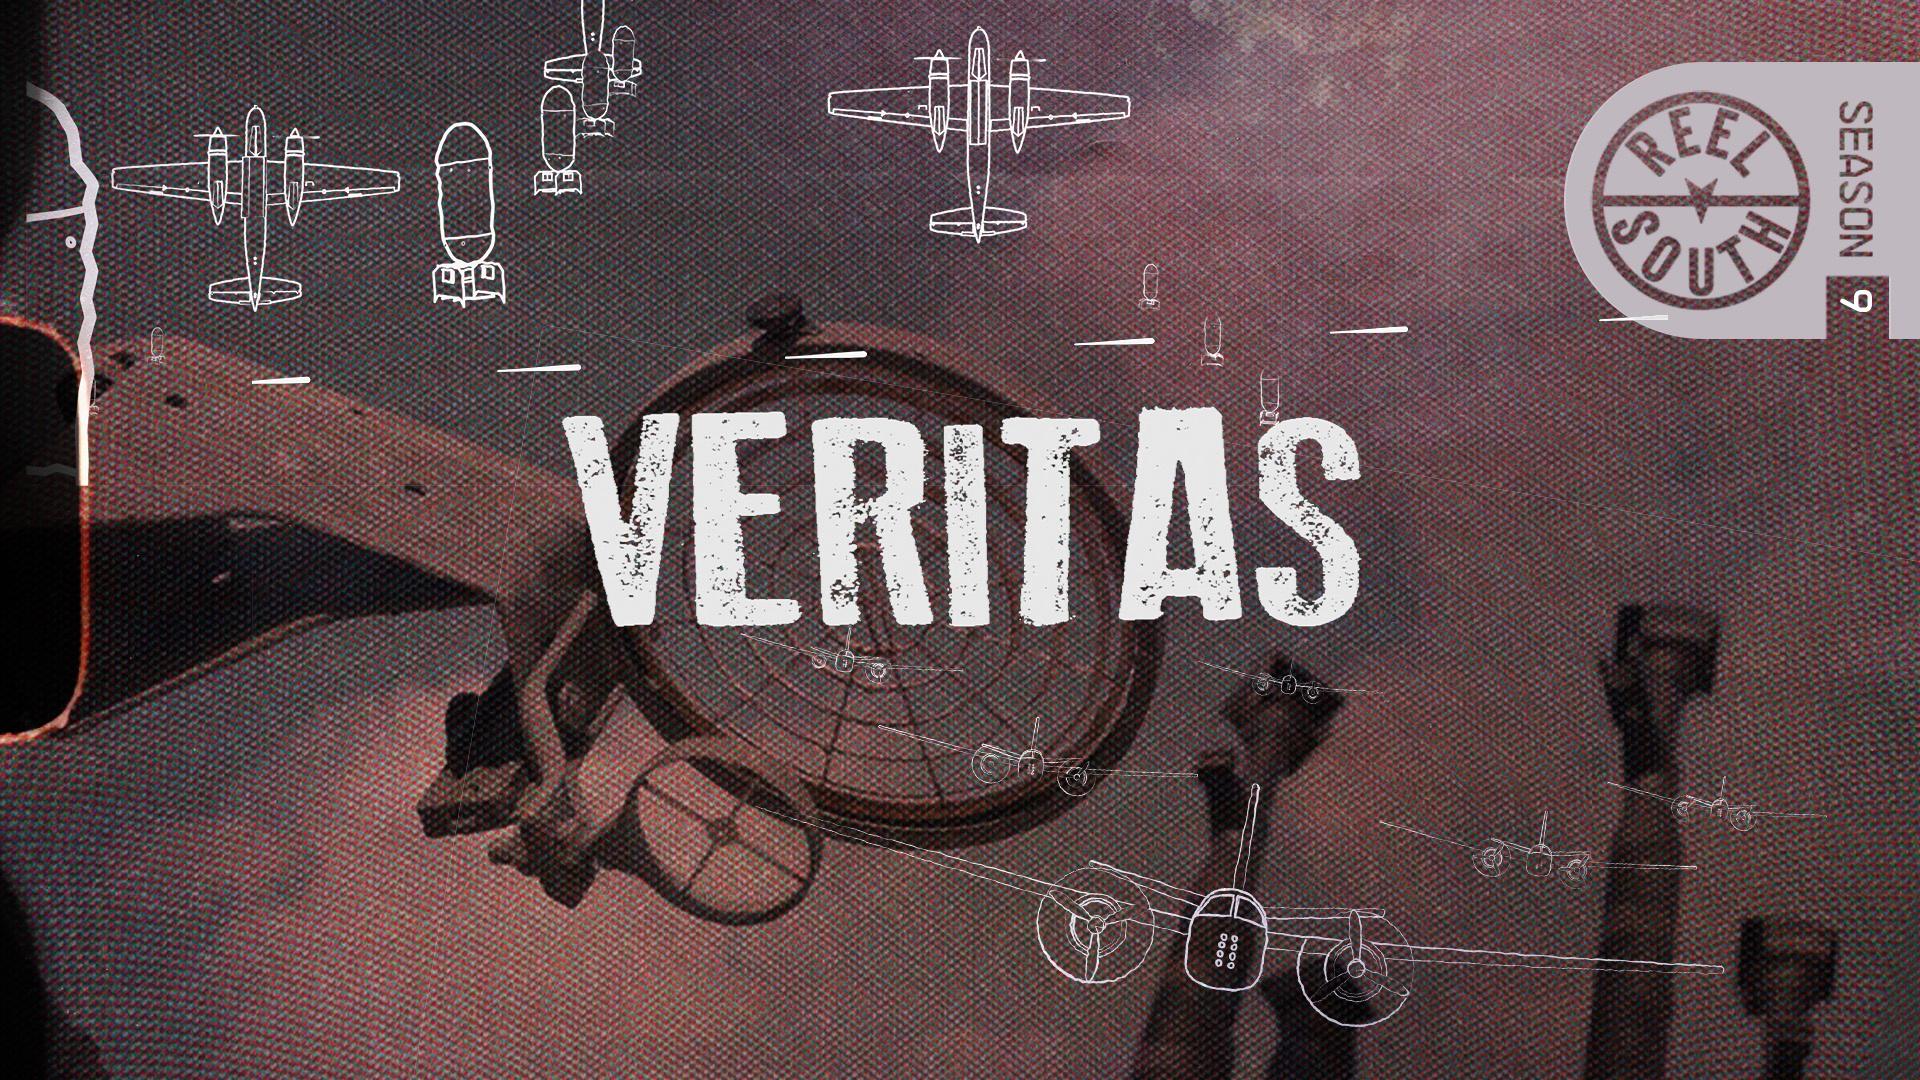 Key art for Veritas, a Reel South film.